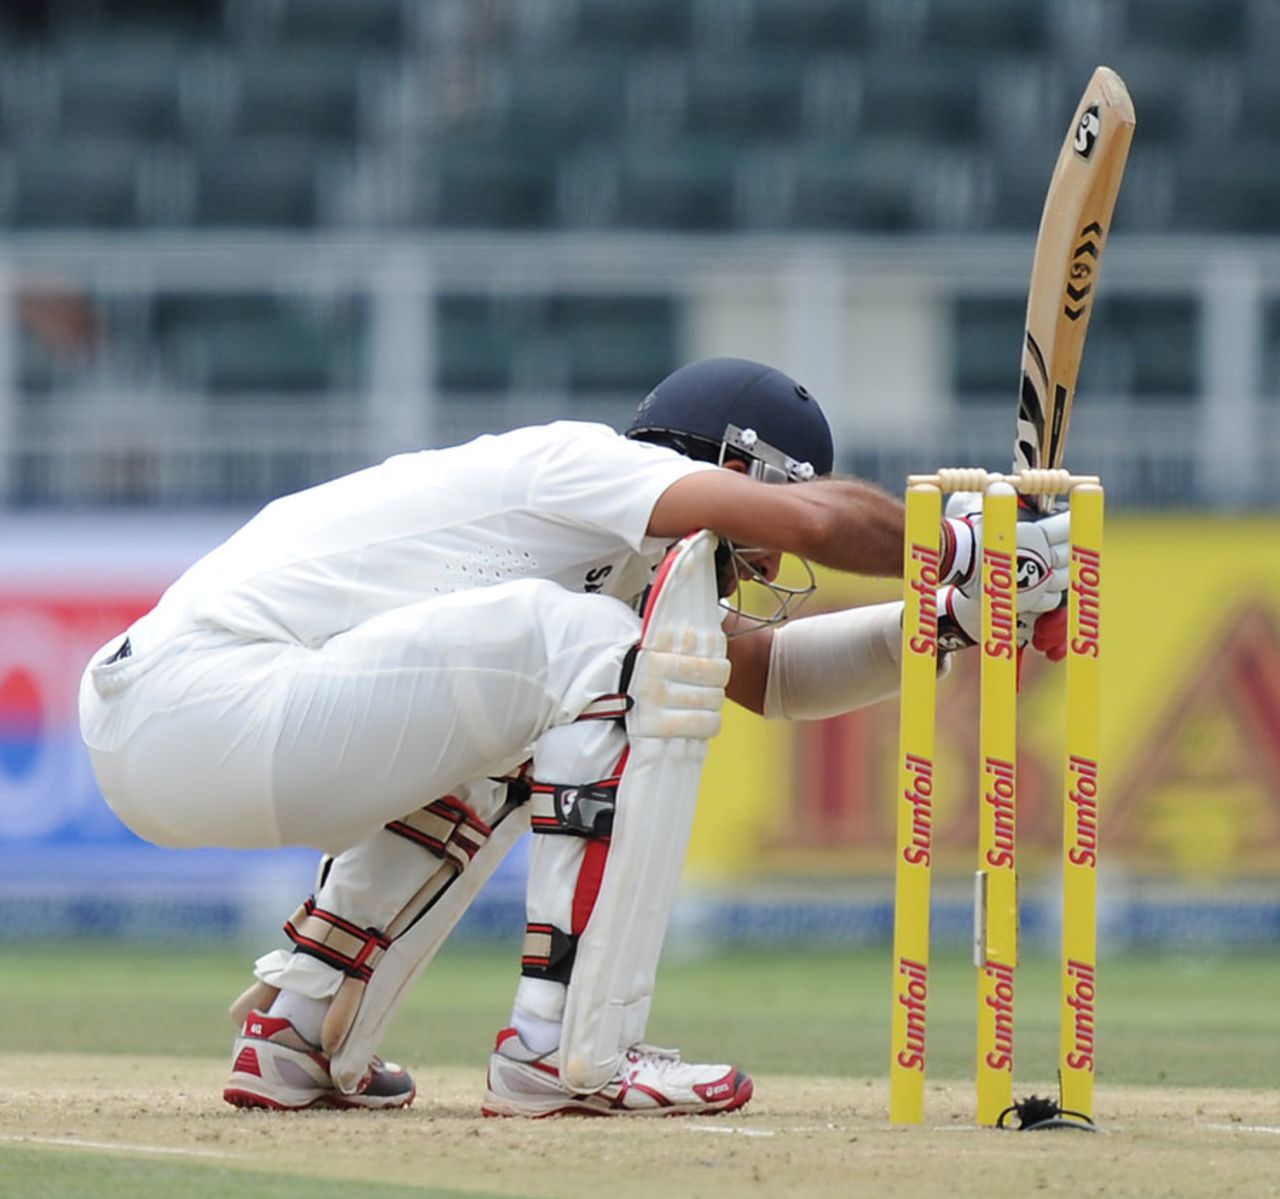 Cheteshwar Pujara ducks low under a bouncer, South Africa v India, 1st Test, Johannesburg, 1st day, December 18, 2013